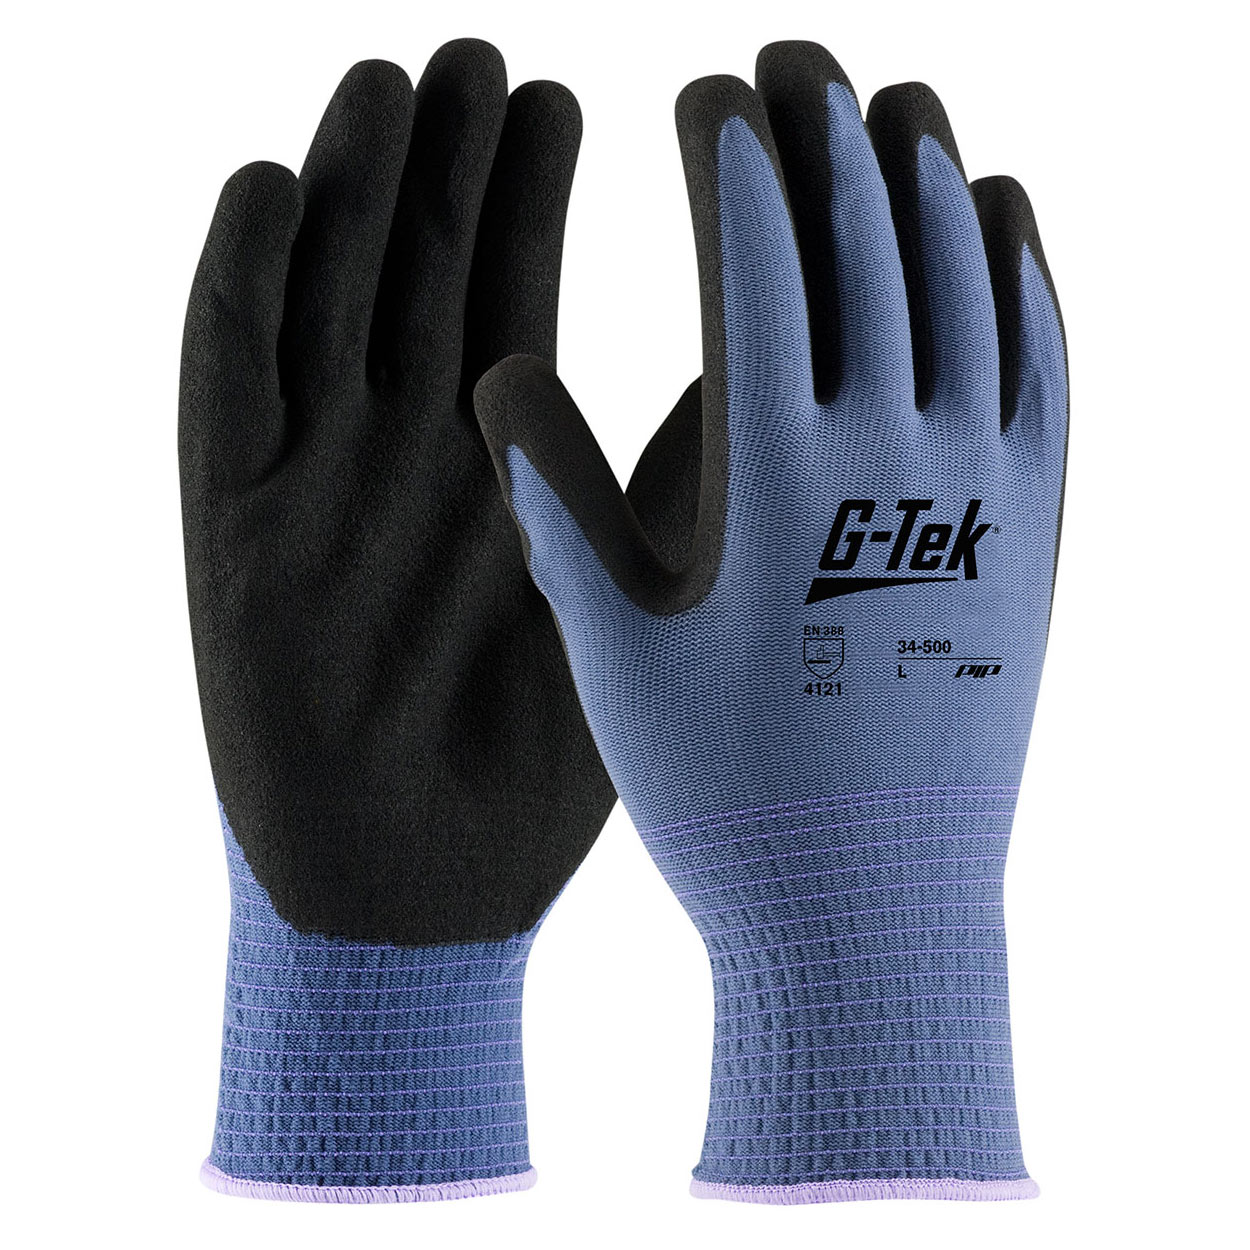 PIP G-Tek Nitrile MicroSurface Nylon Grip Gloves, Blue/Black, XL, 12 Pairs